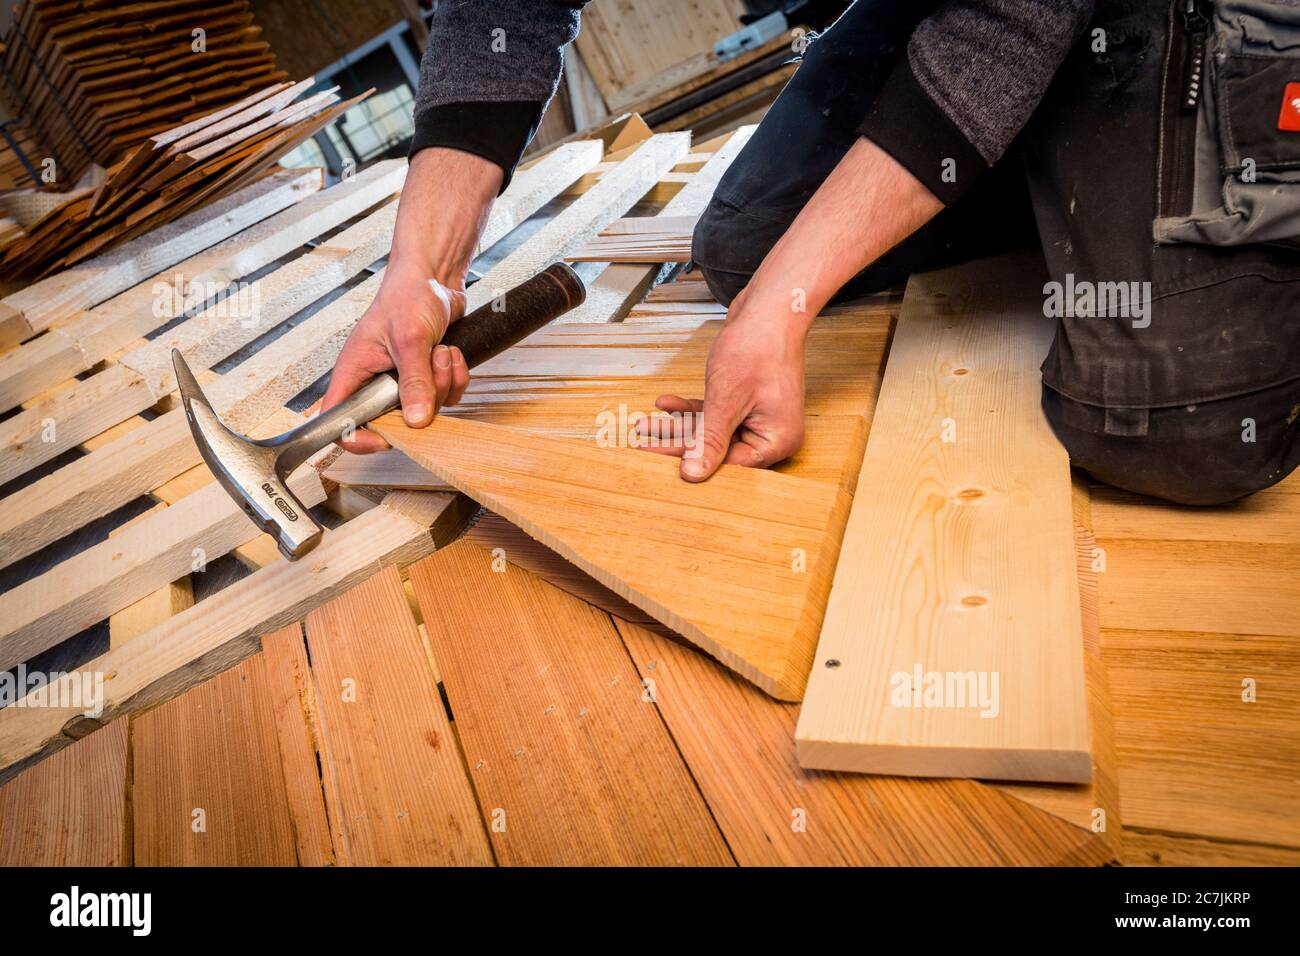 Germany, Bavaria, carpenter fastens wooden shingles Stock Photo